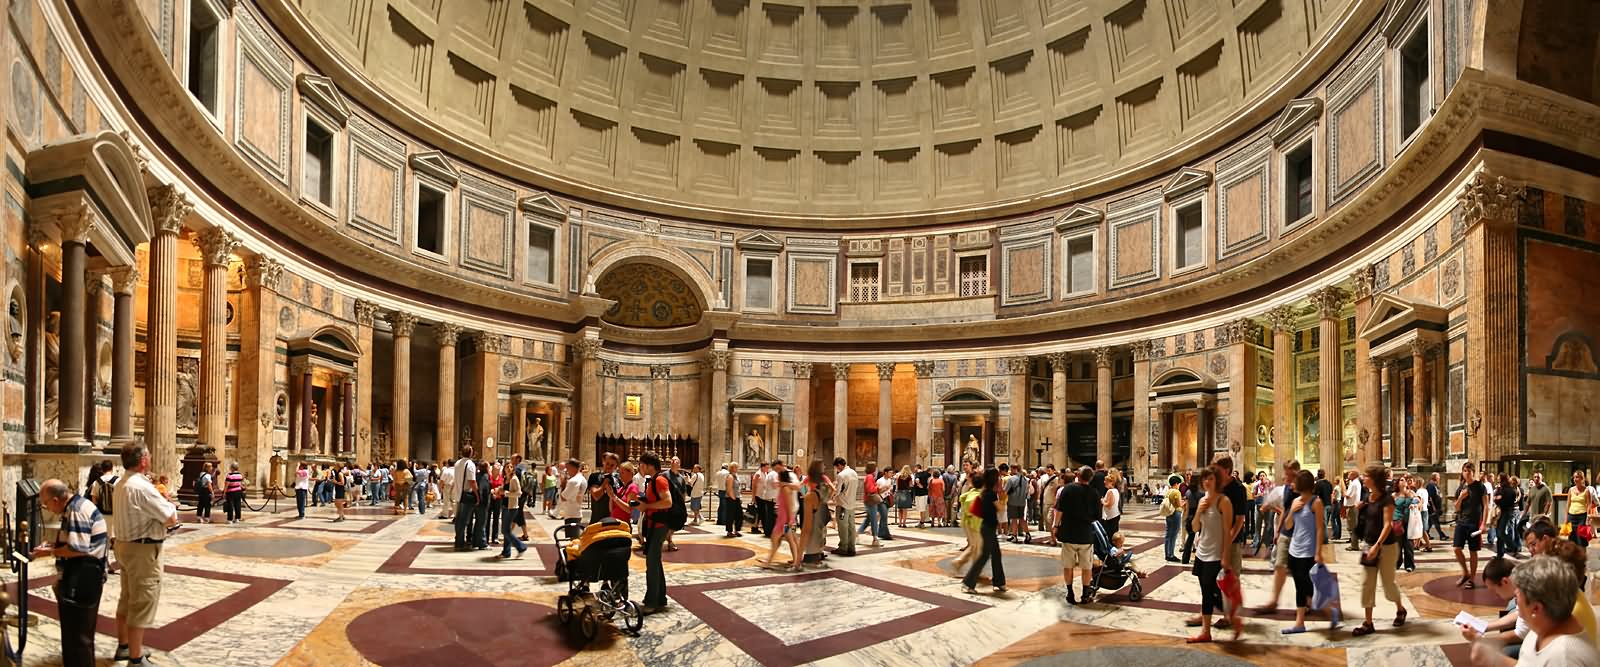 Panorama View Of Pantheon Interior